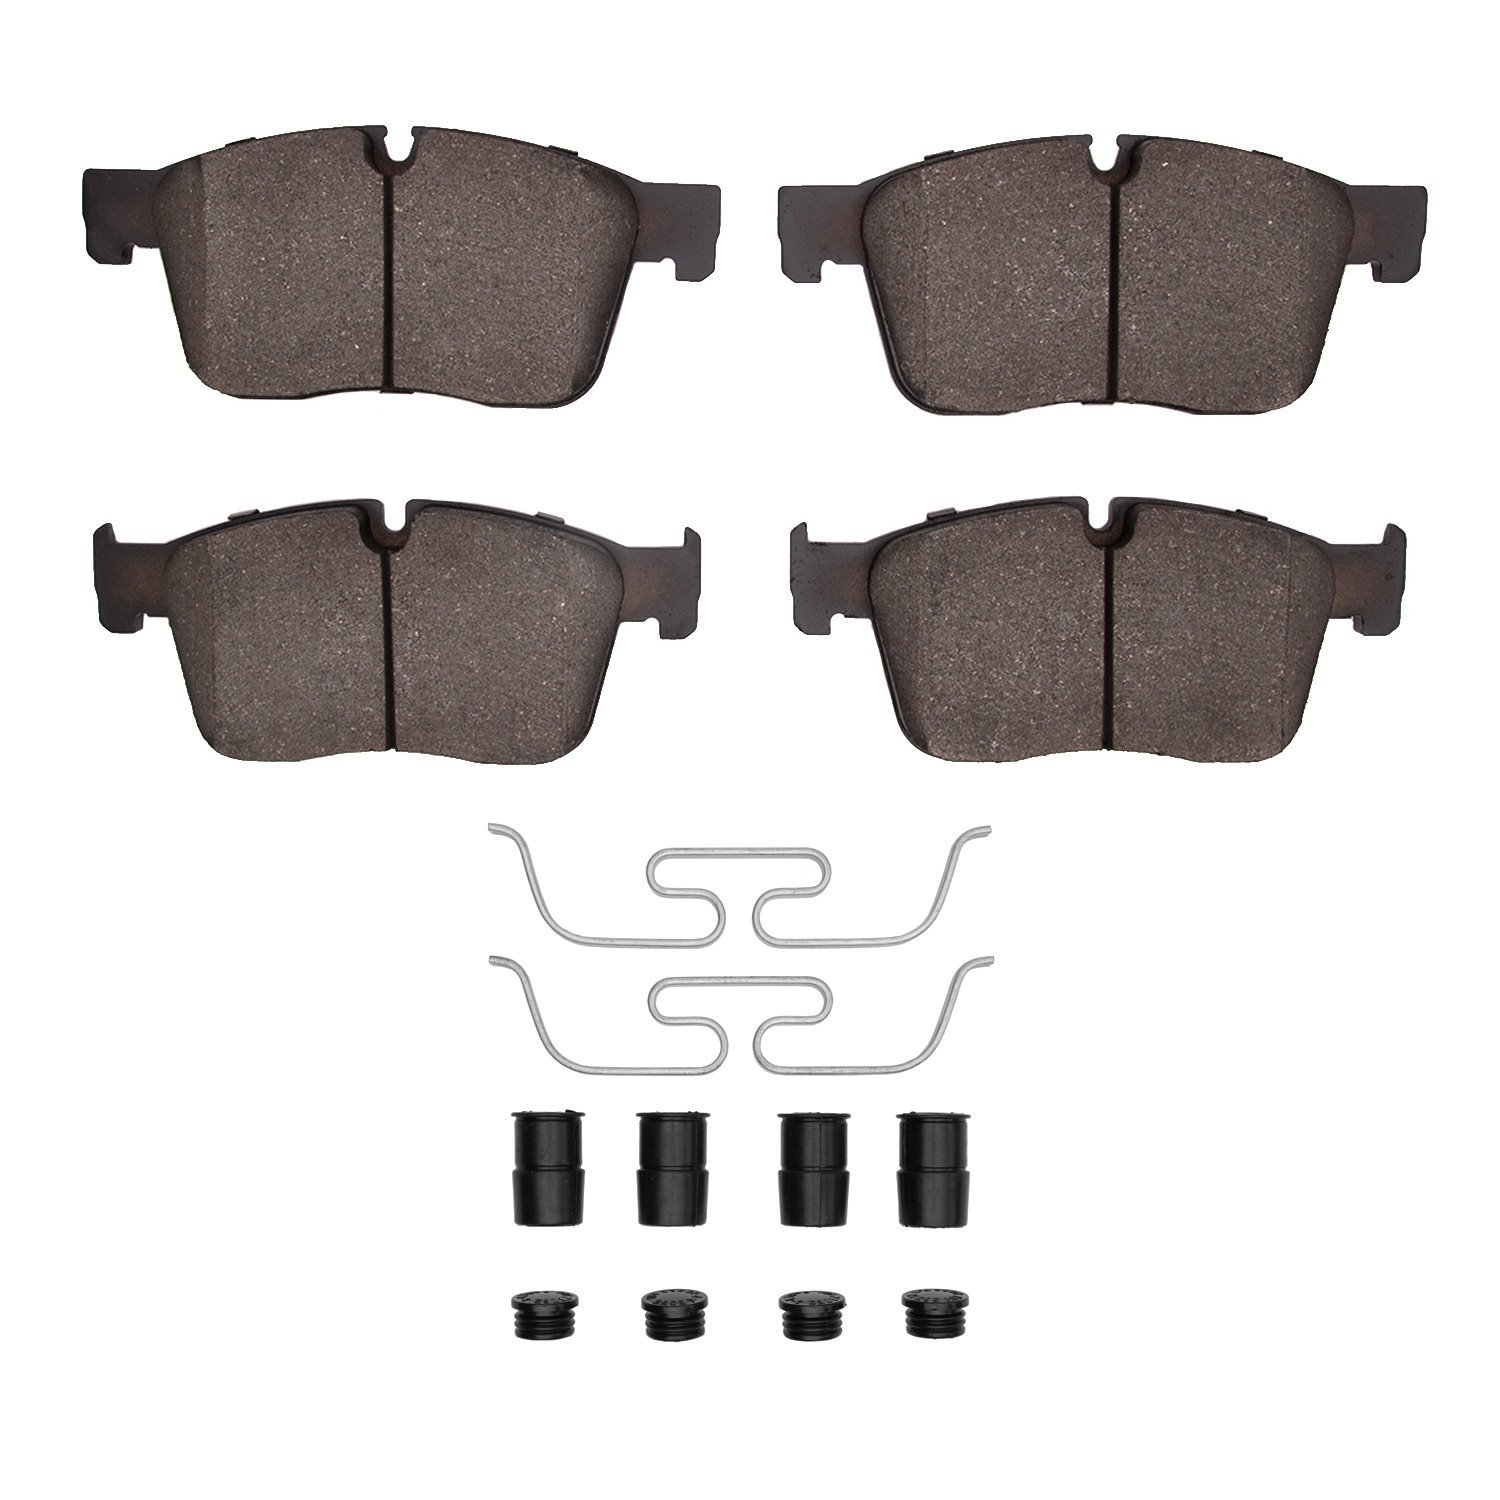 1600-1861-01 5000 Euro Ceramic Brake Pads & Hardware Kit, Fits Select Multiple Makes/Models, Position: Front